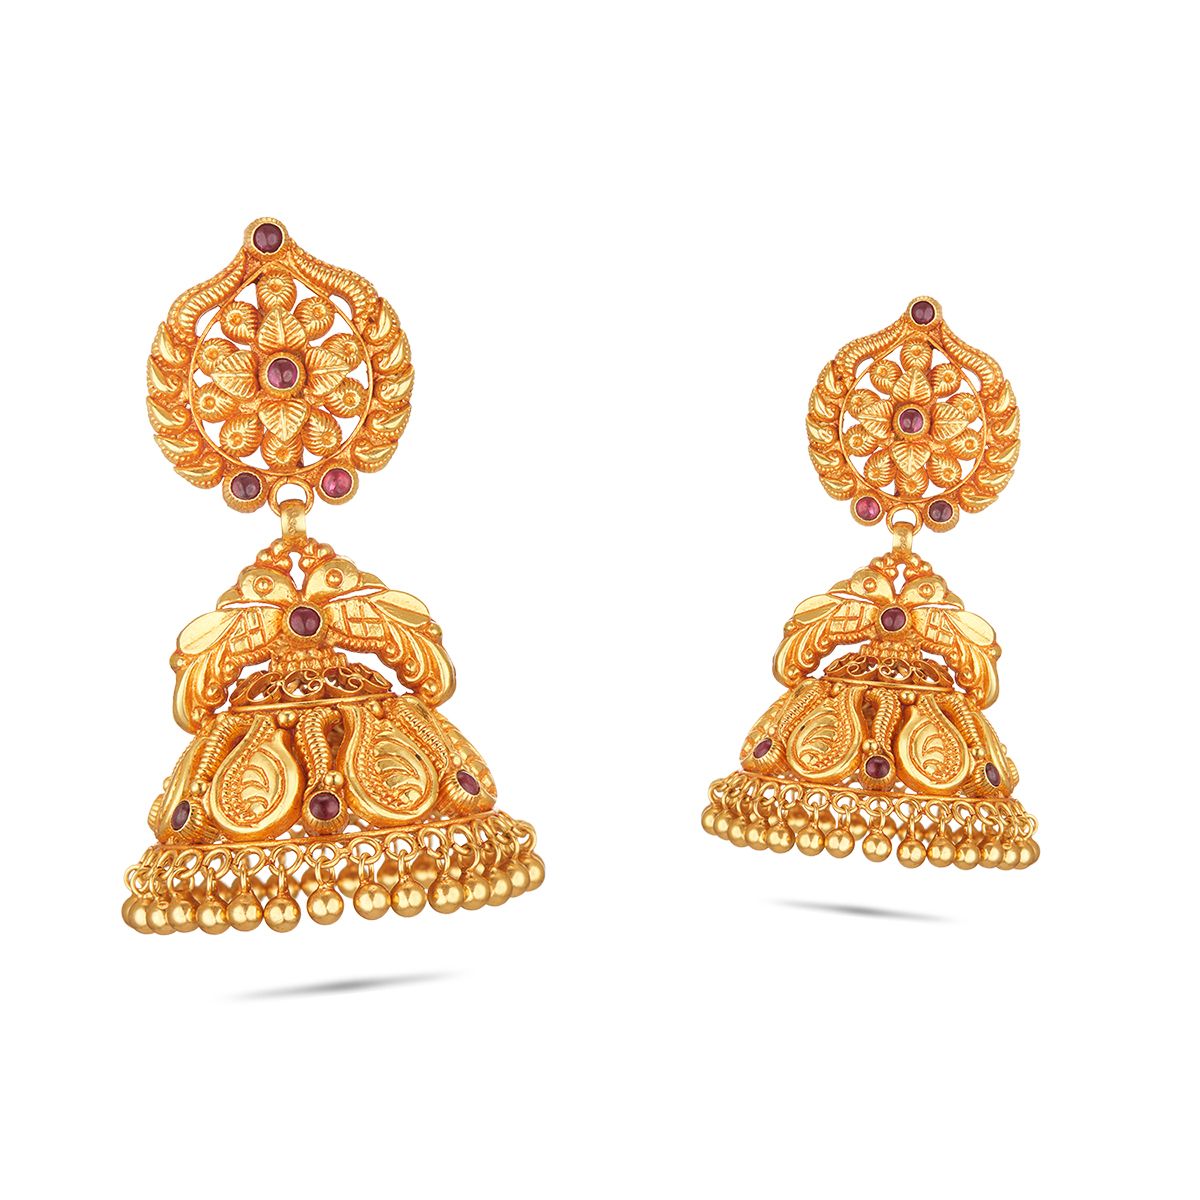 Light Weight Gold Jhumka Earrings Designs Under 10 Grams J25120